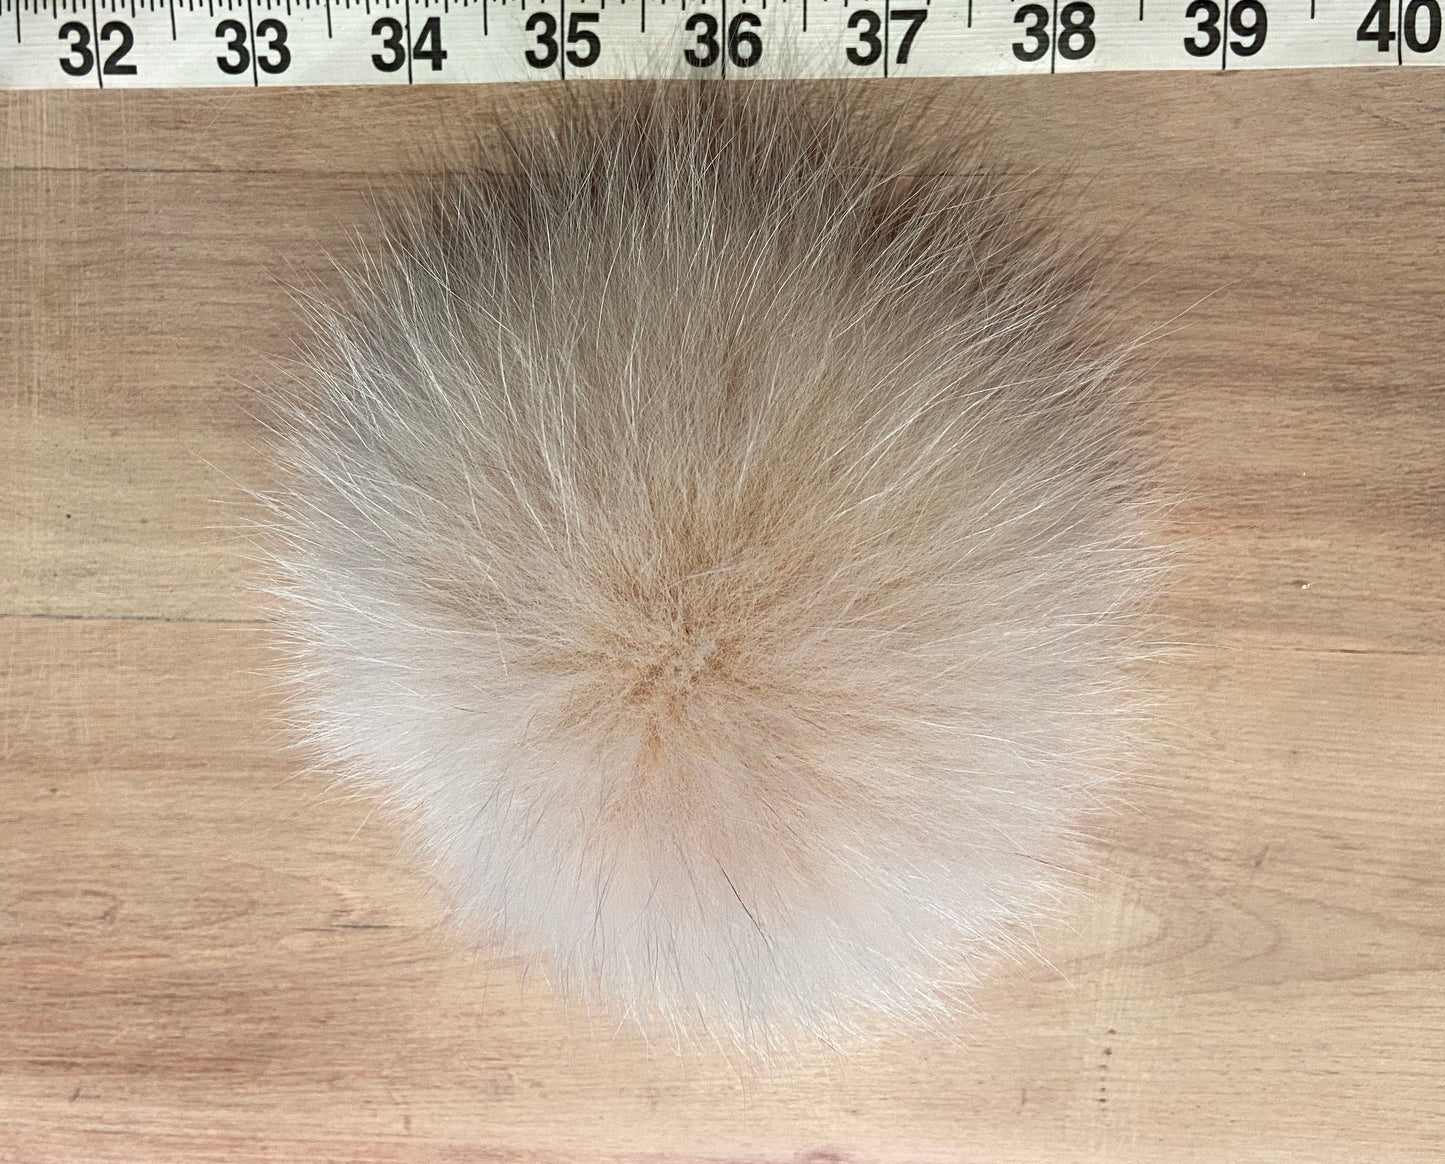 Ivory Peach Fox Fur Pom, 4 Inch